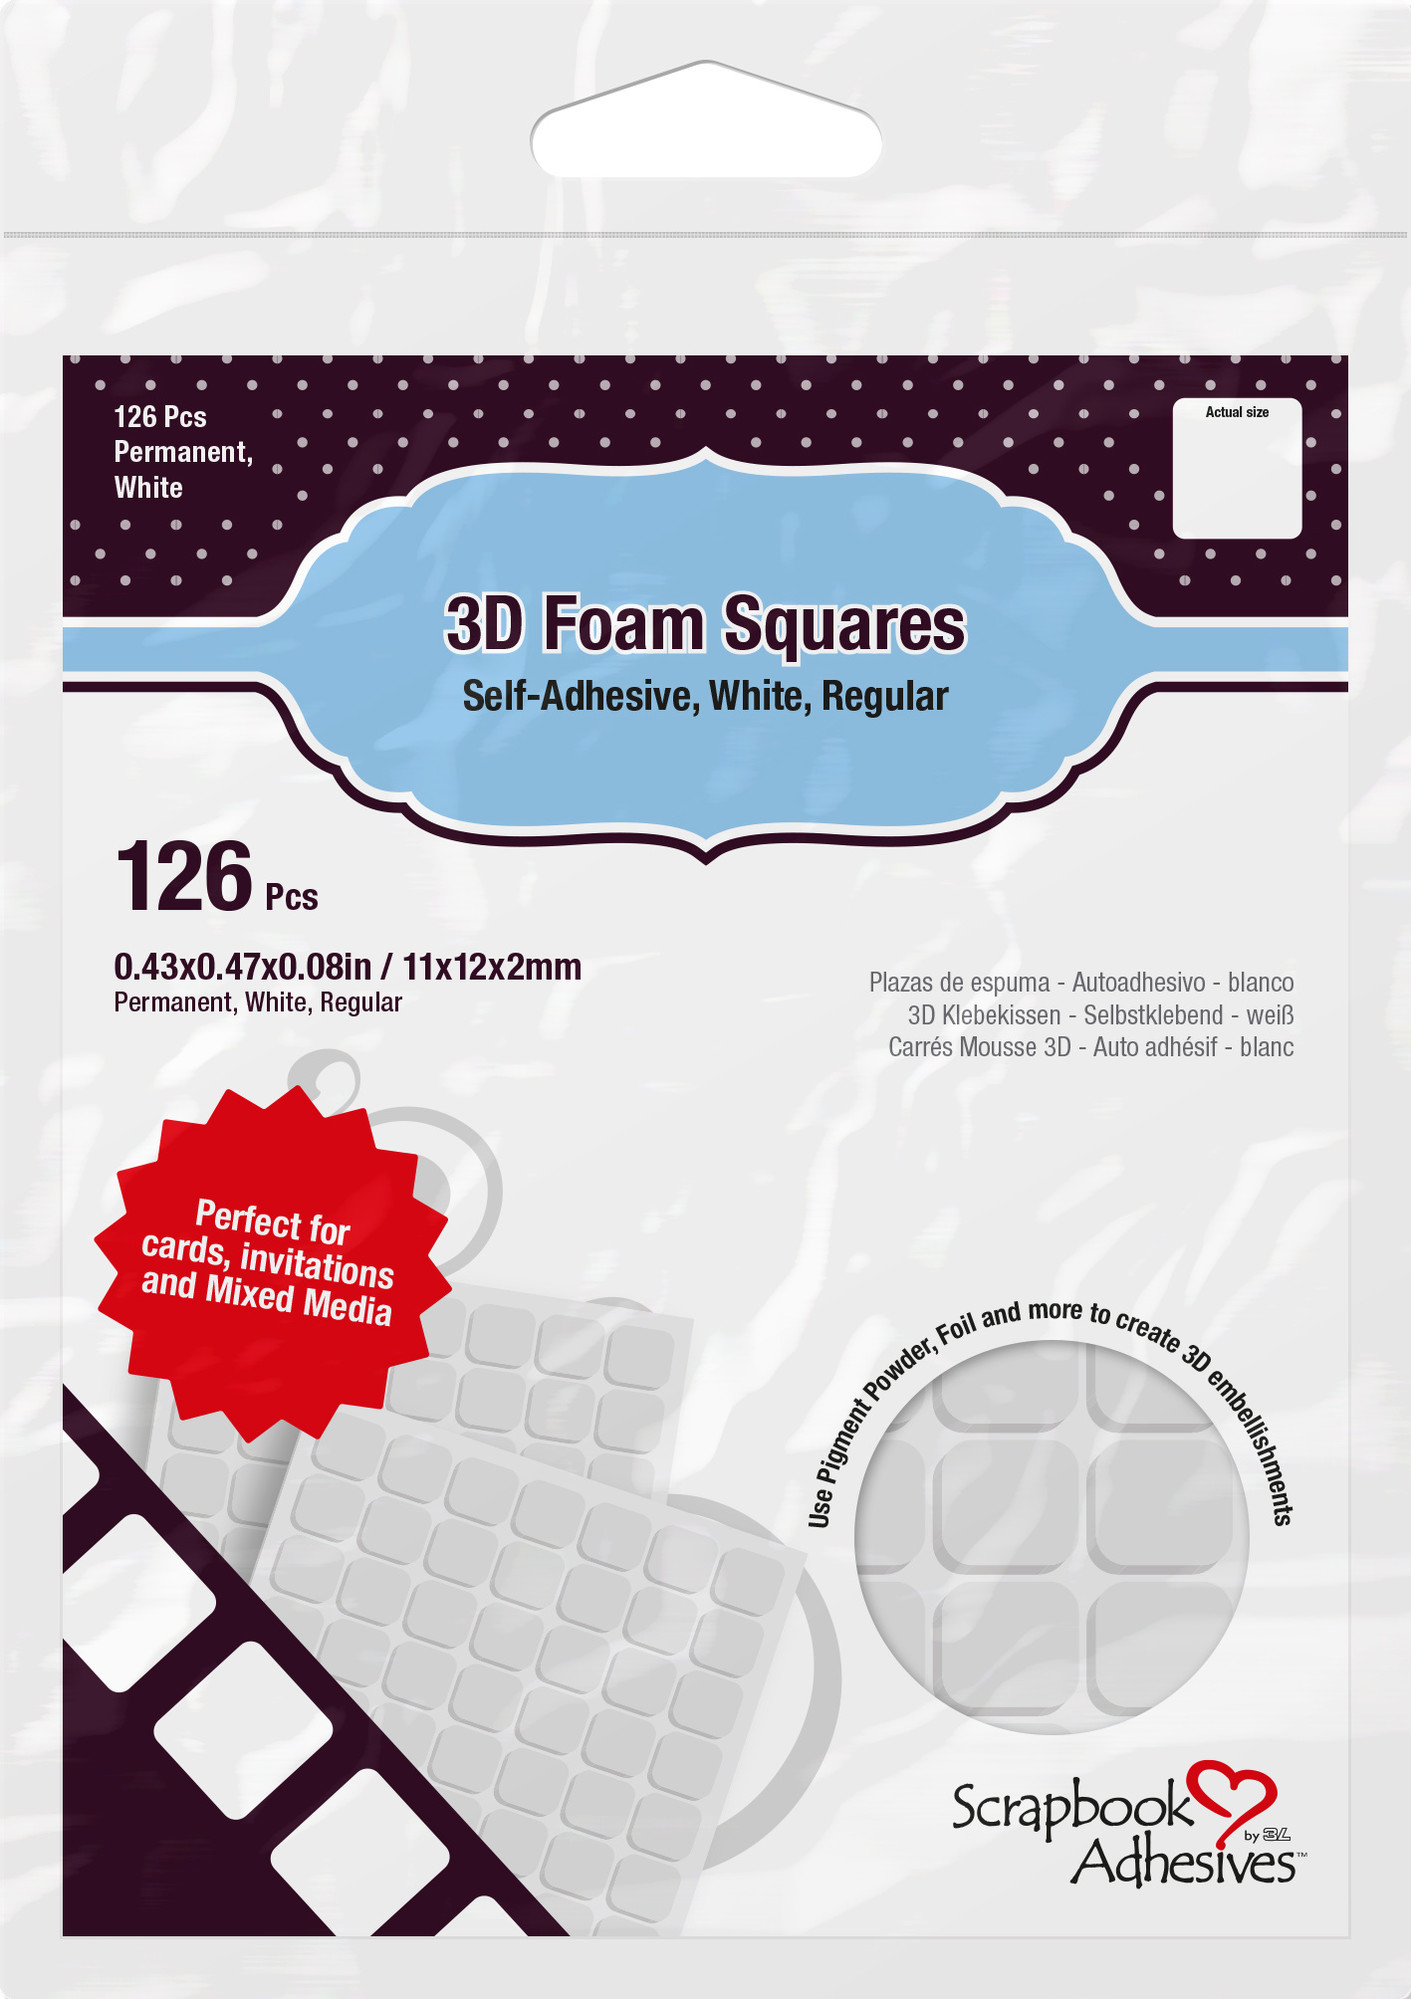 Scrapbook Adhesives 3D Foam Squares White Regular (126pcs)